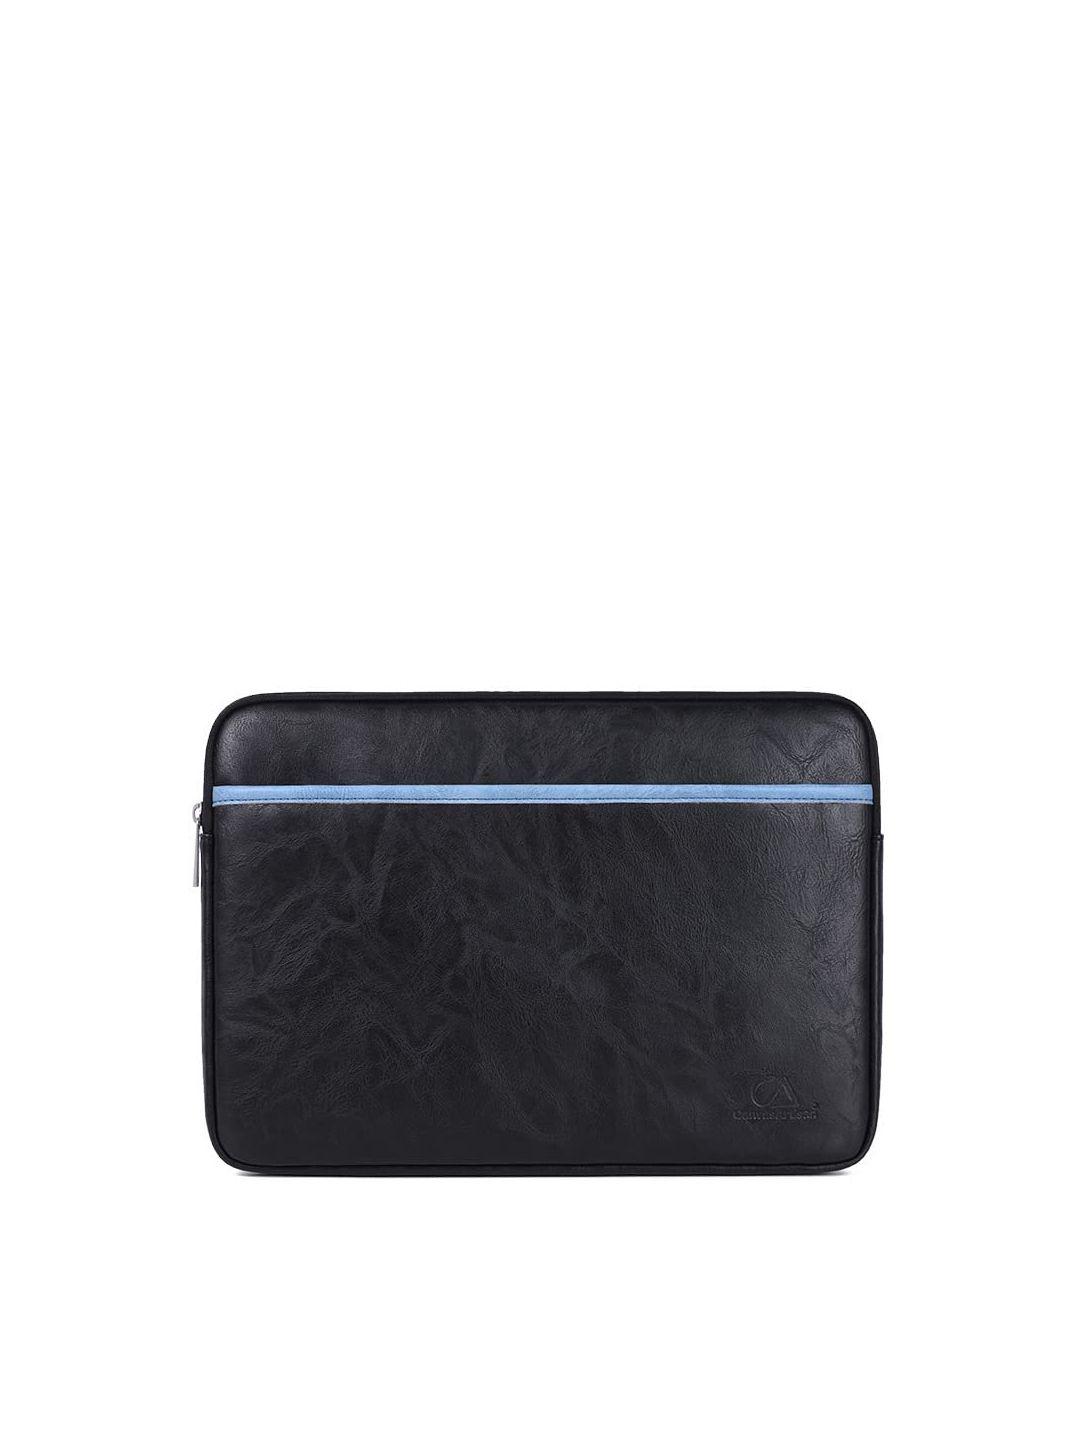 red lemon unisex black & blue laptop bag